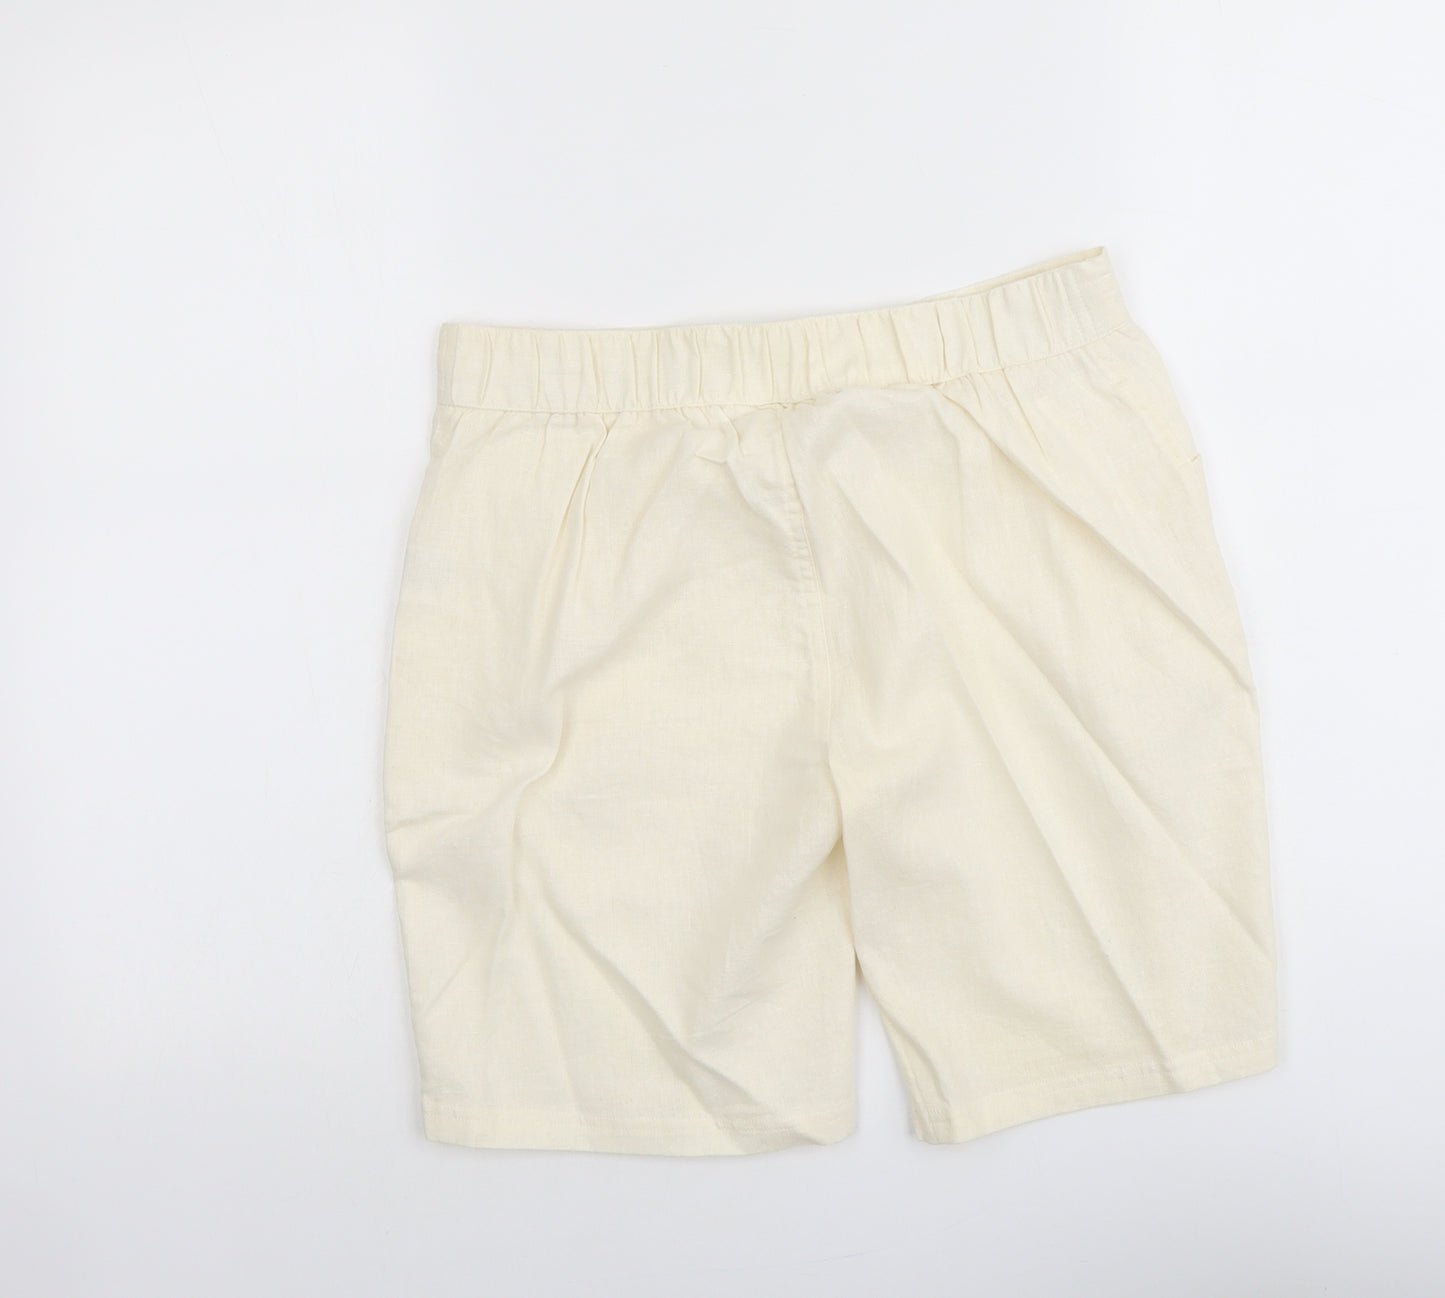 Preworn Womens Beige Cotton Basic Shorts Size M L8 in Regular Drawstring